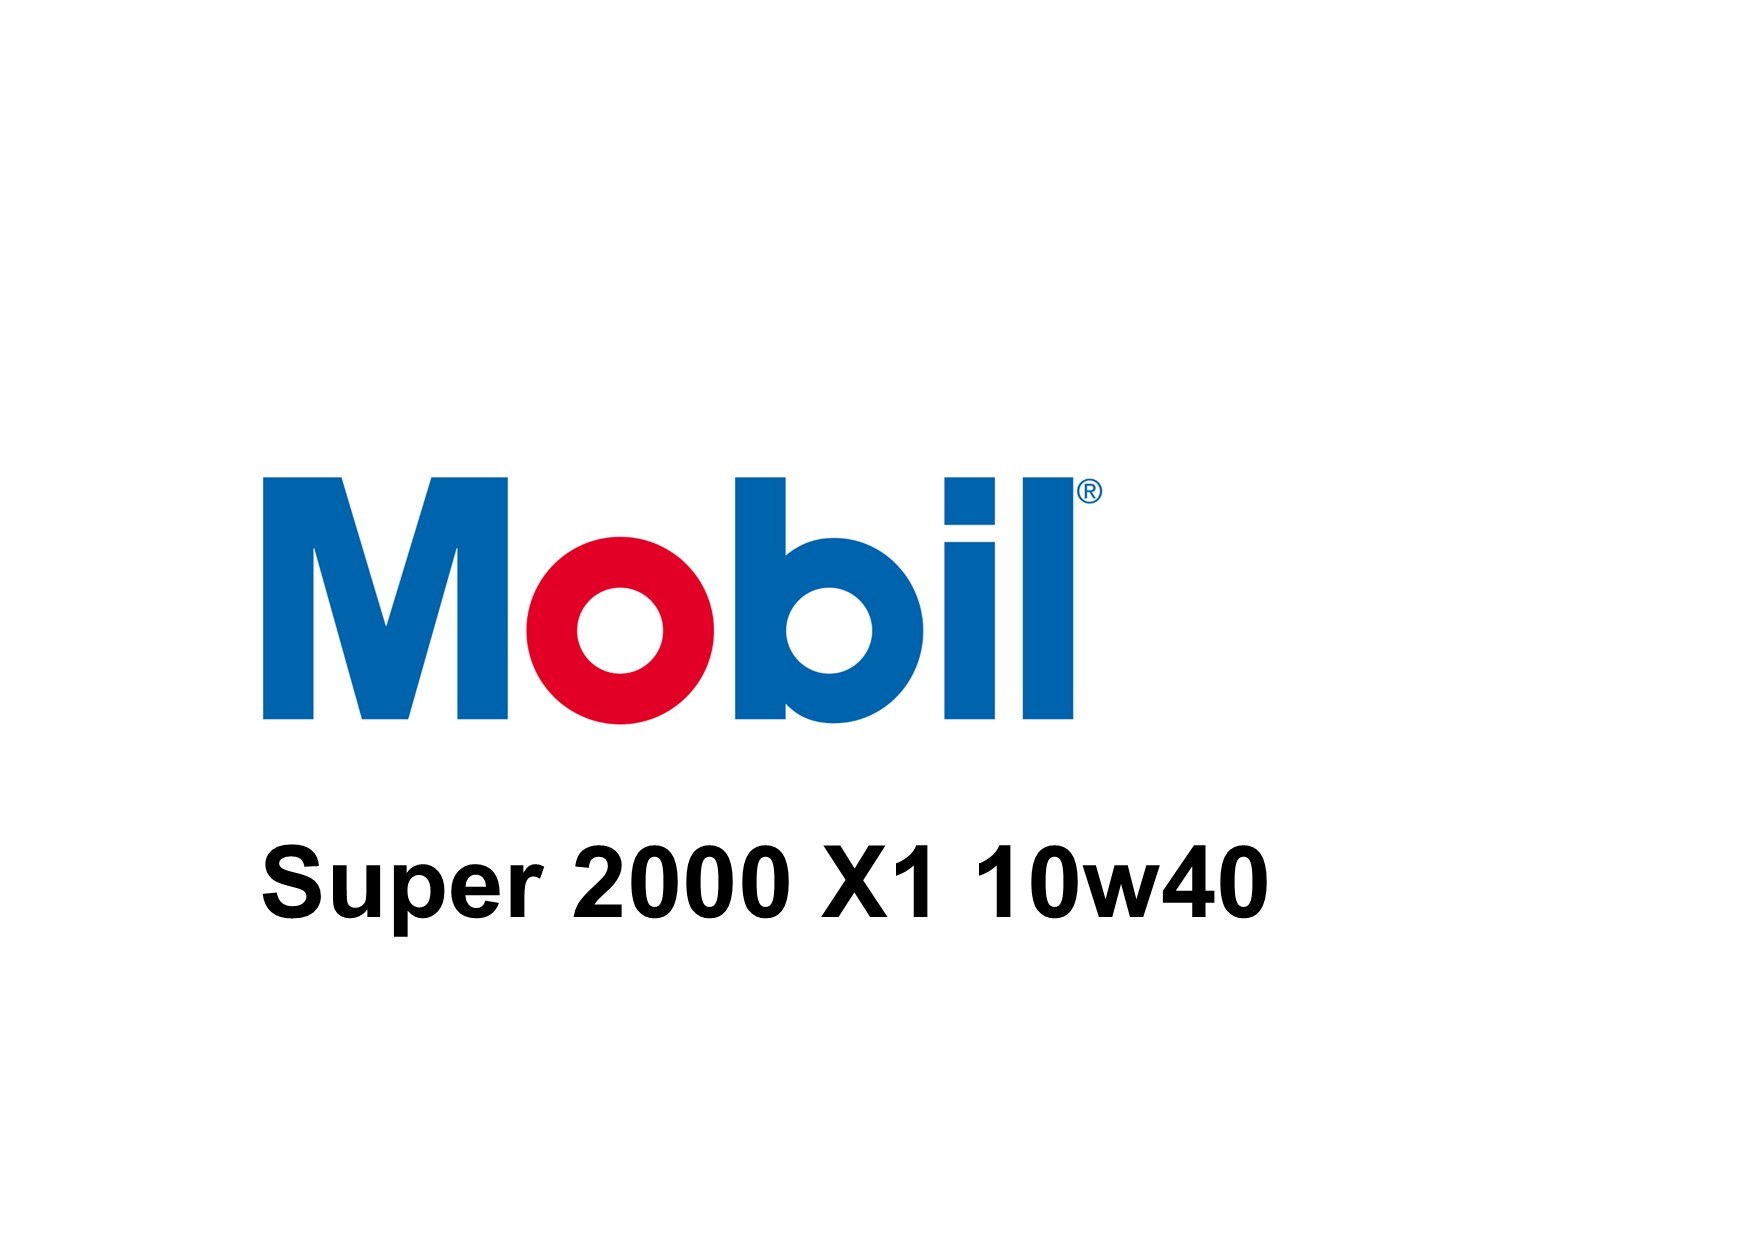 Mobil super 2000 X1 10w40